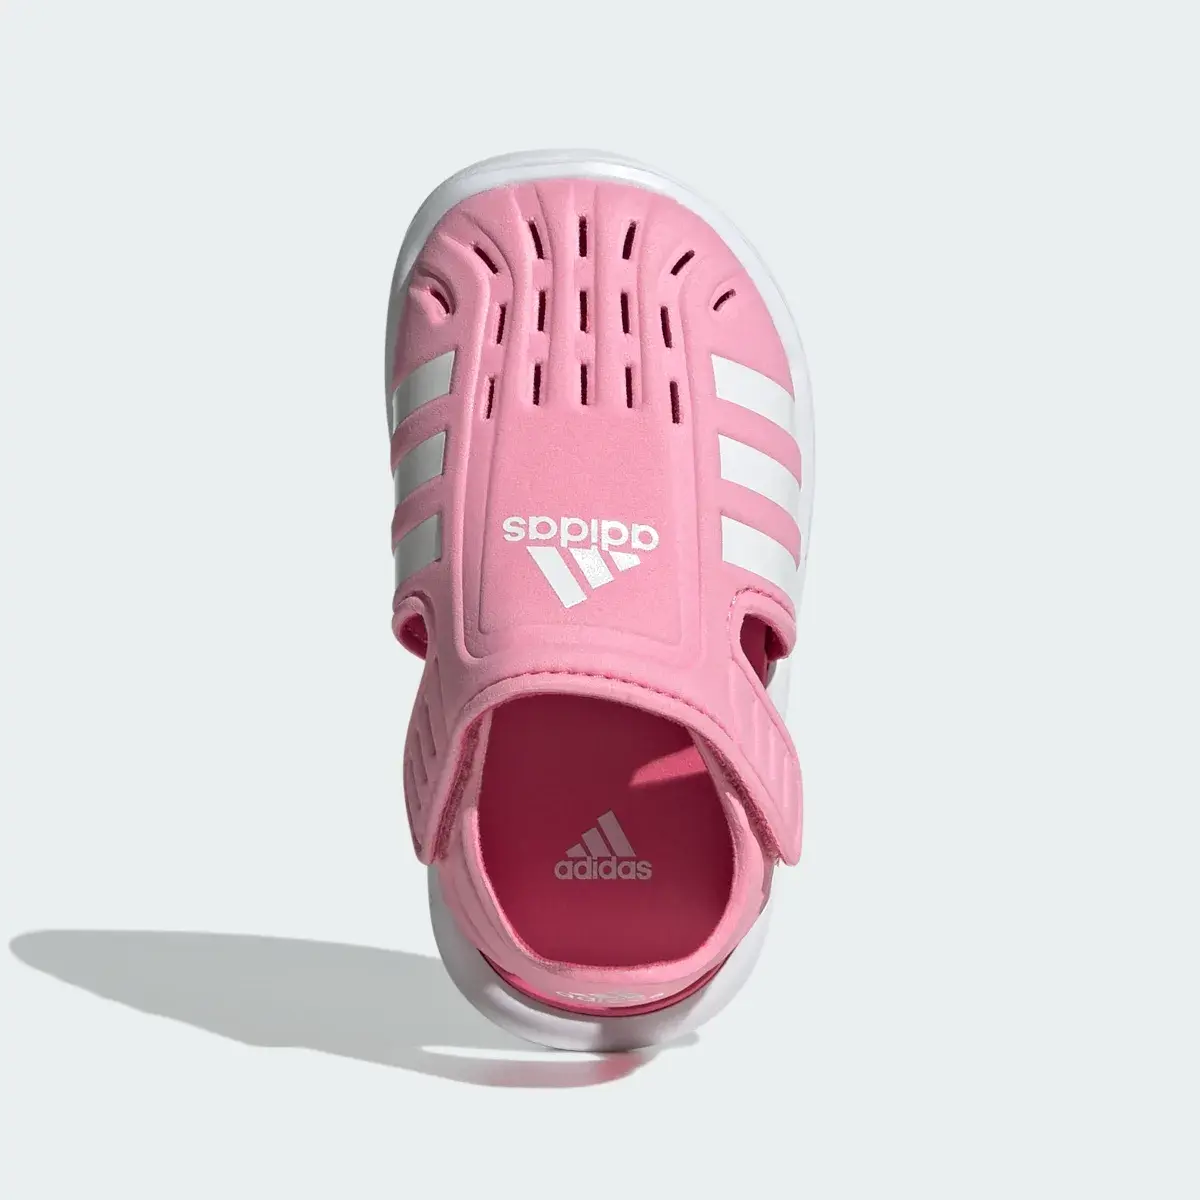 Adidas Closed-Toe Summer Water Sandale. 3